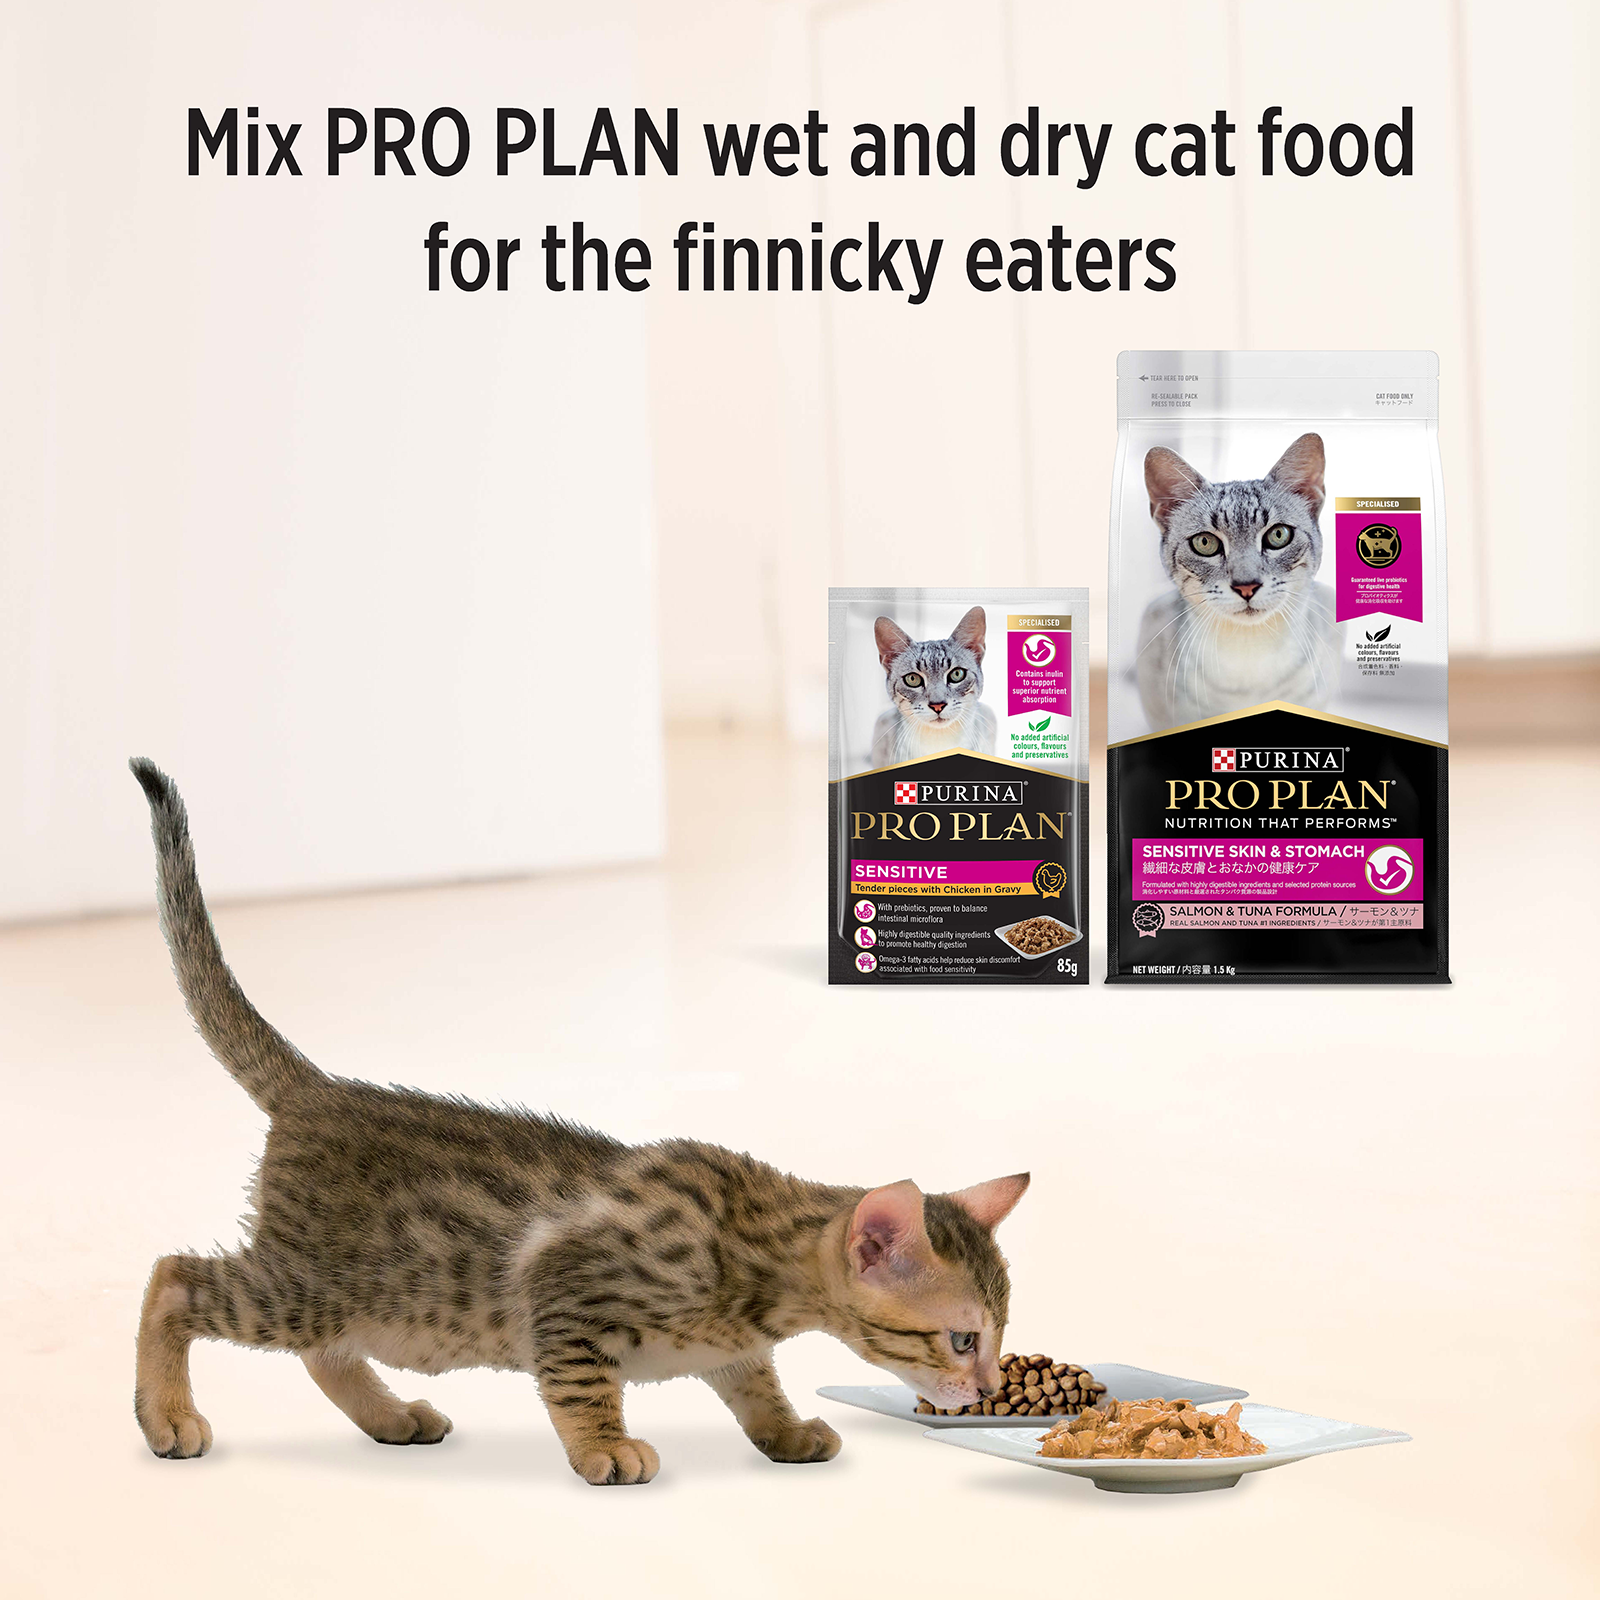 Pro Plan Cat Food Pouch Adult Sensitive Chicken & Gravy